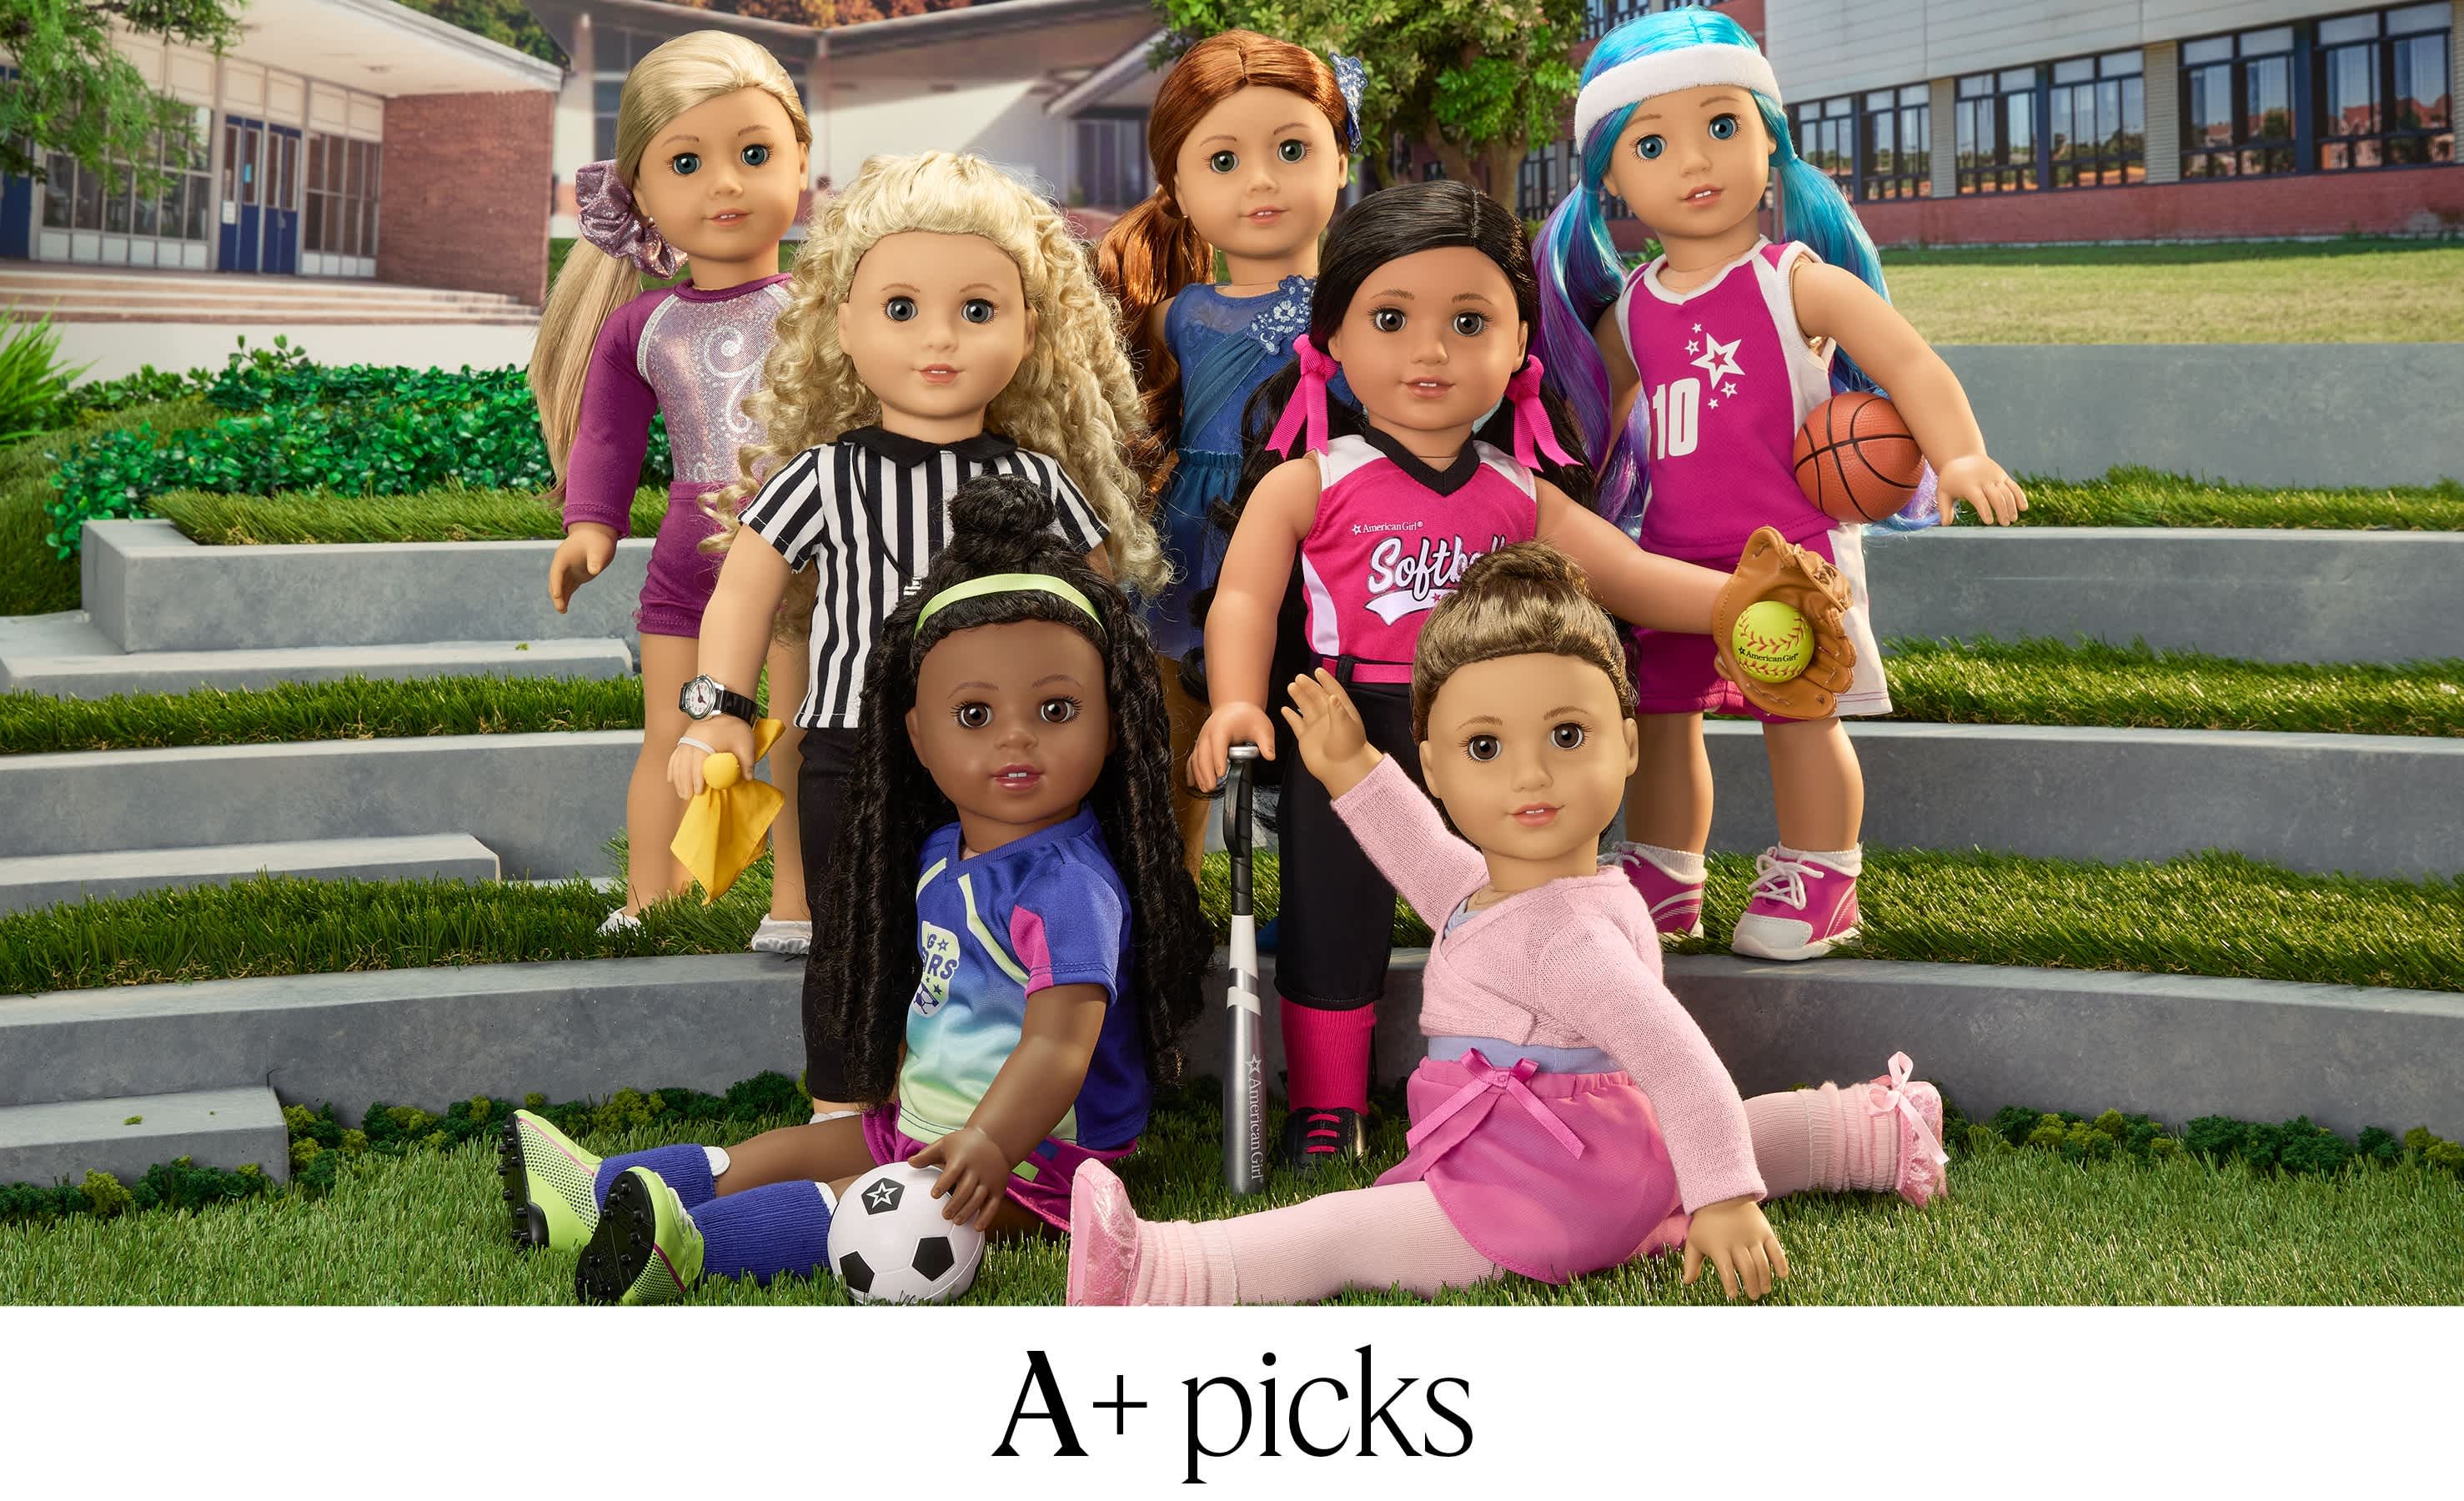 Group shot of dolls wearing sports uniforms